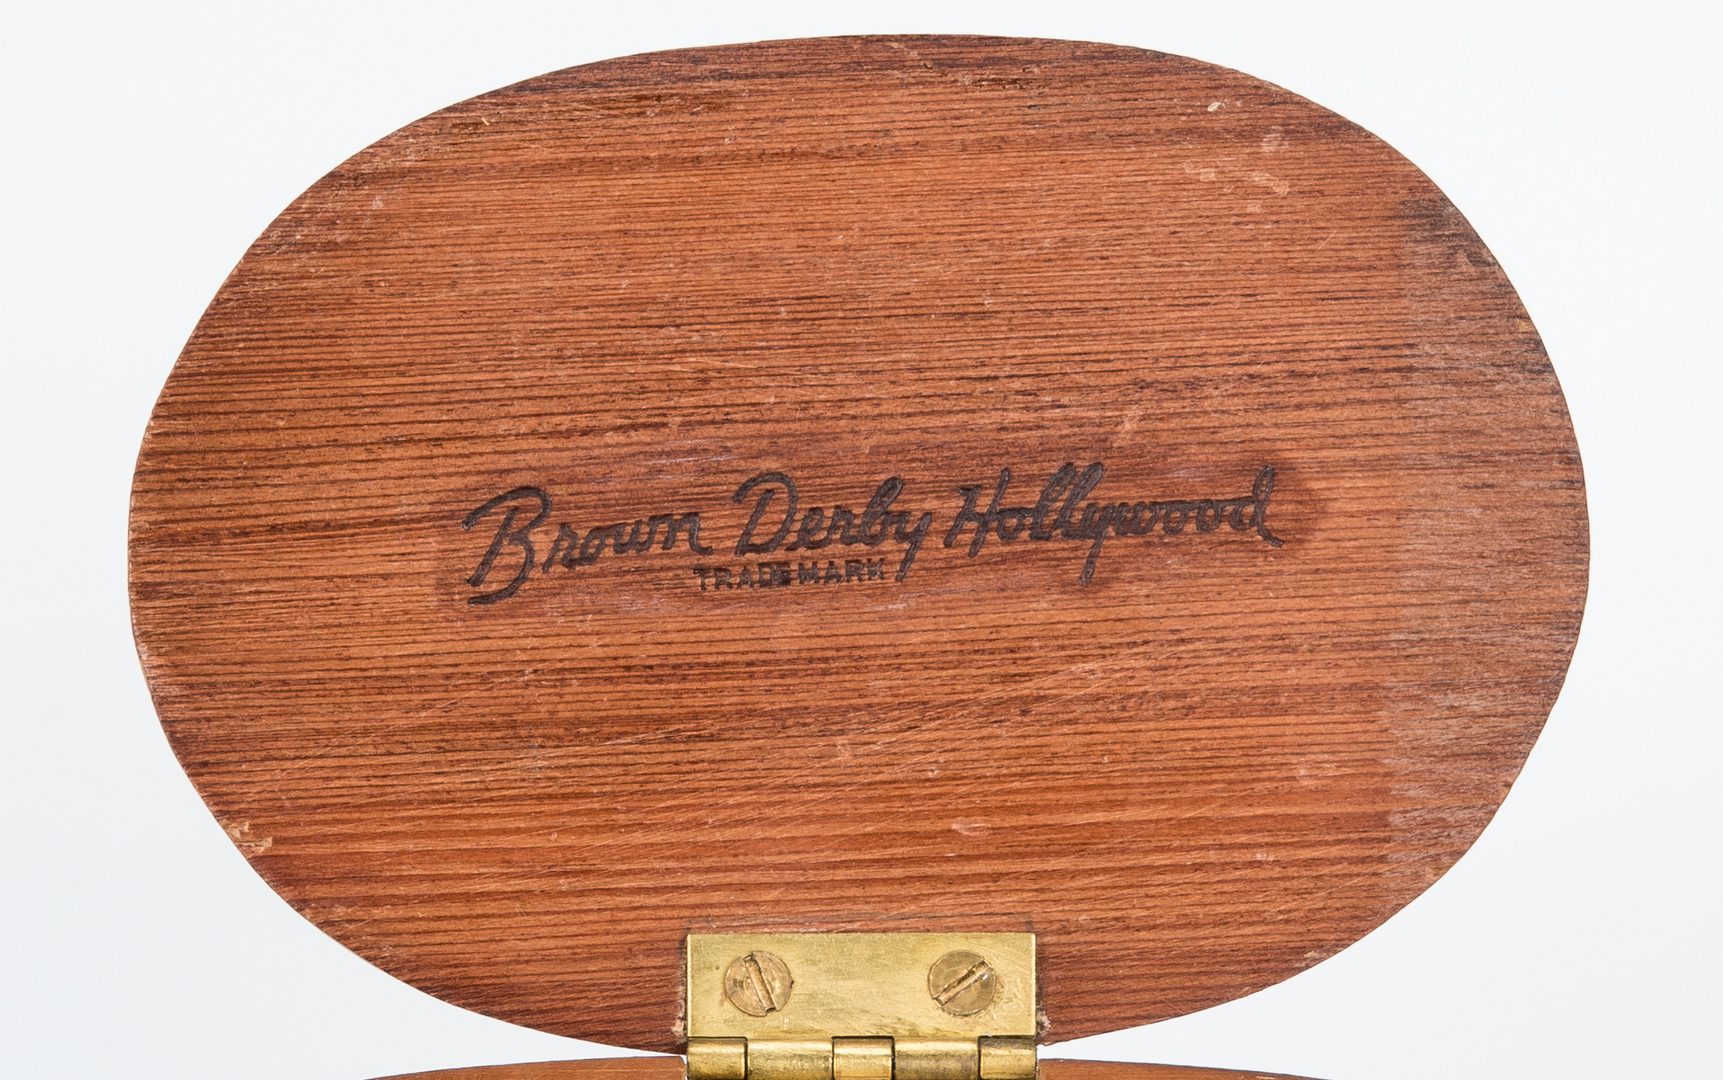 Lot 707: Wood Brown Derby Hat Cigarette Box